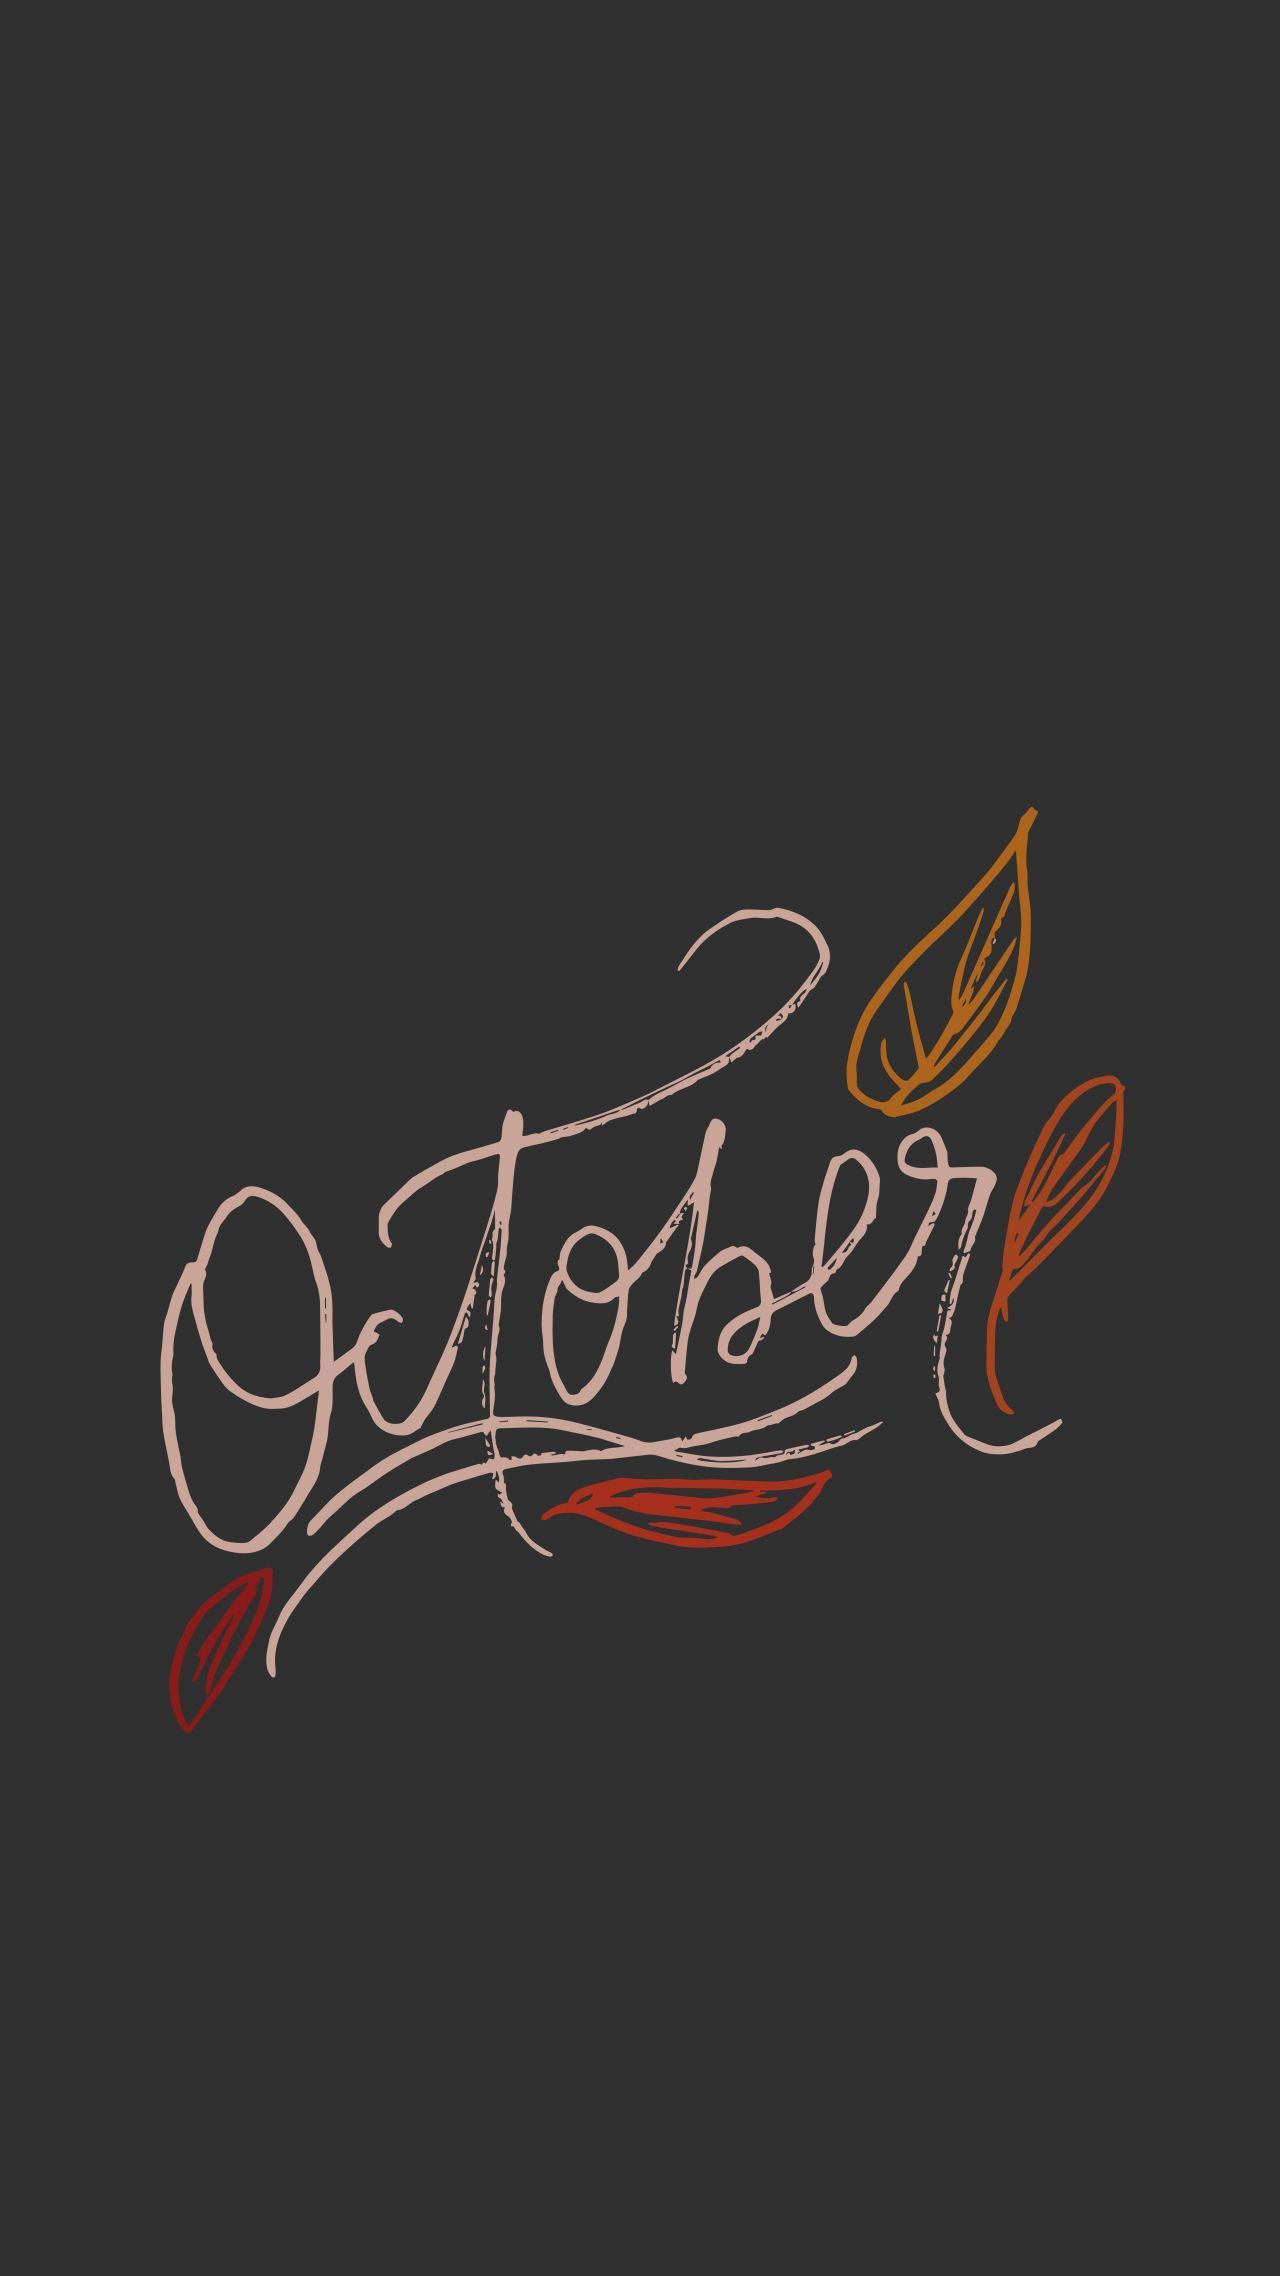 Aesthetic October Wallpaper Free HD Wallpaper